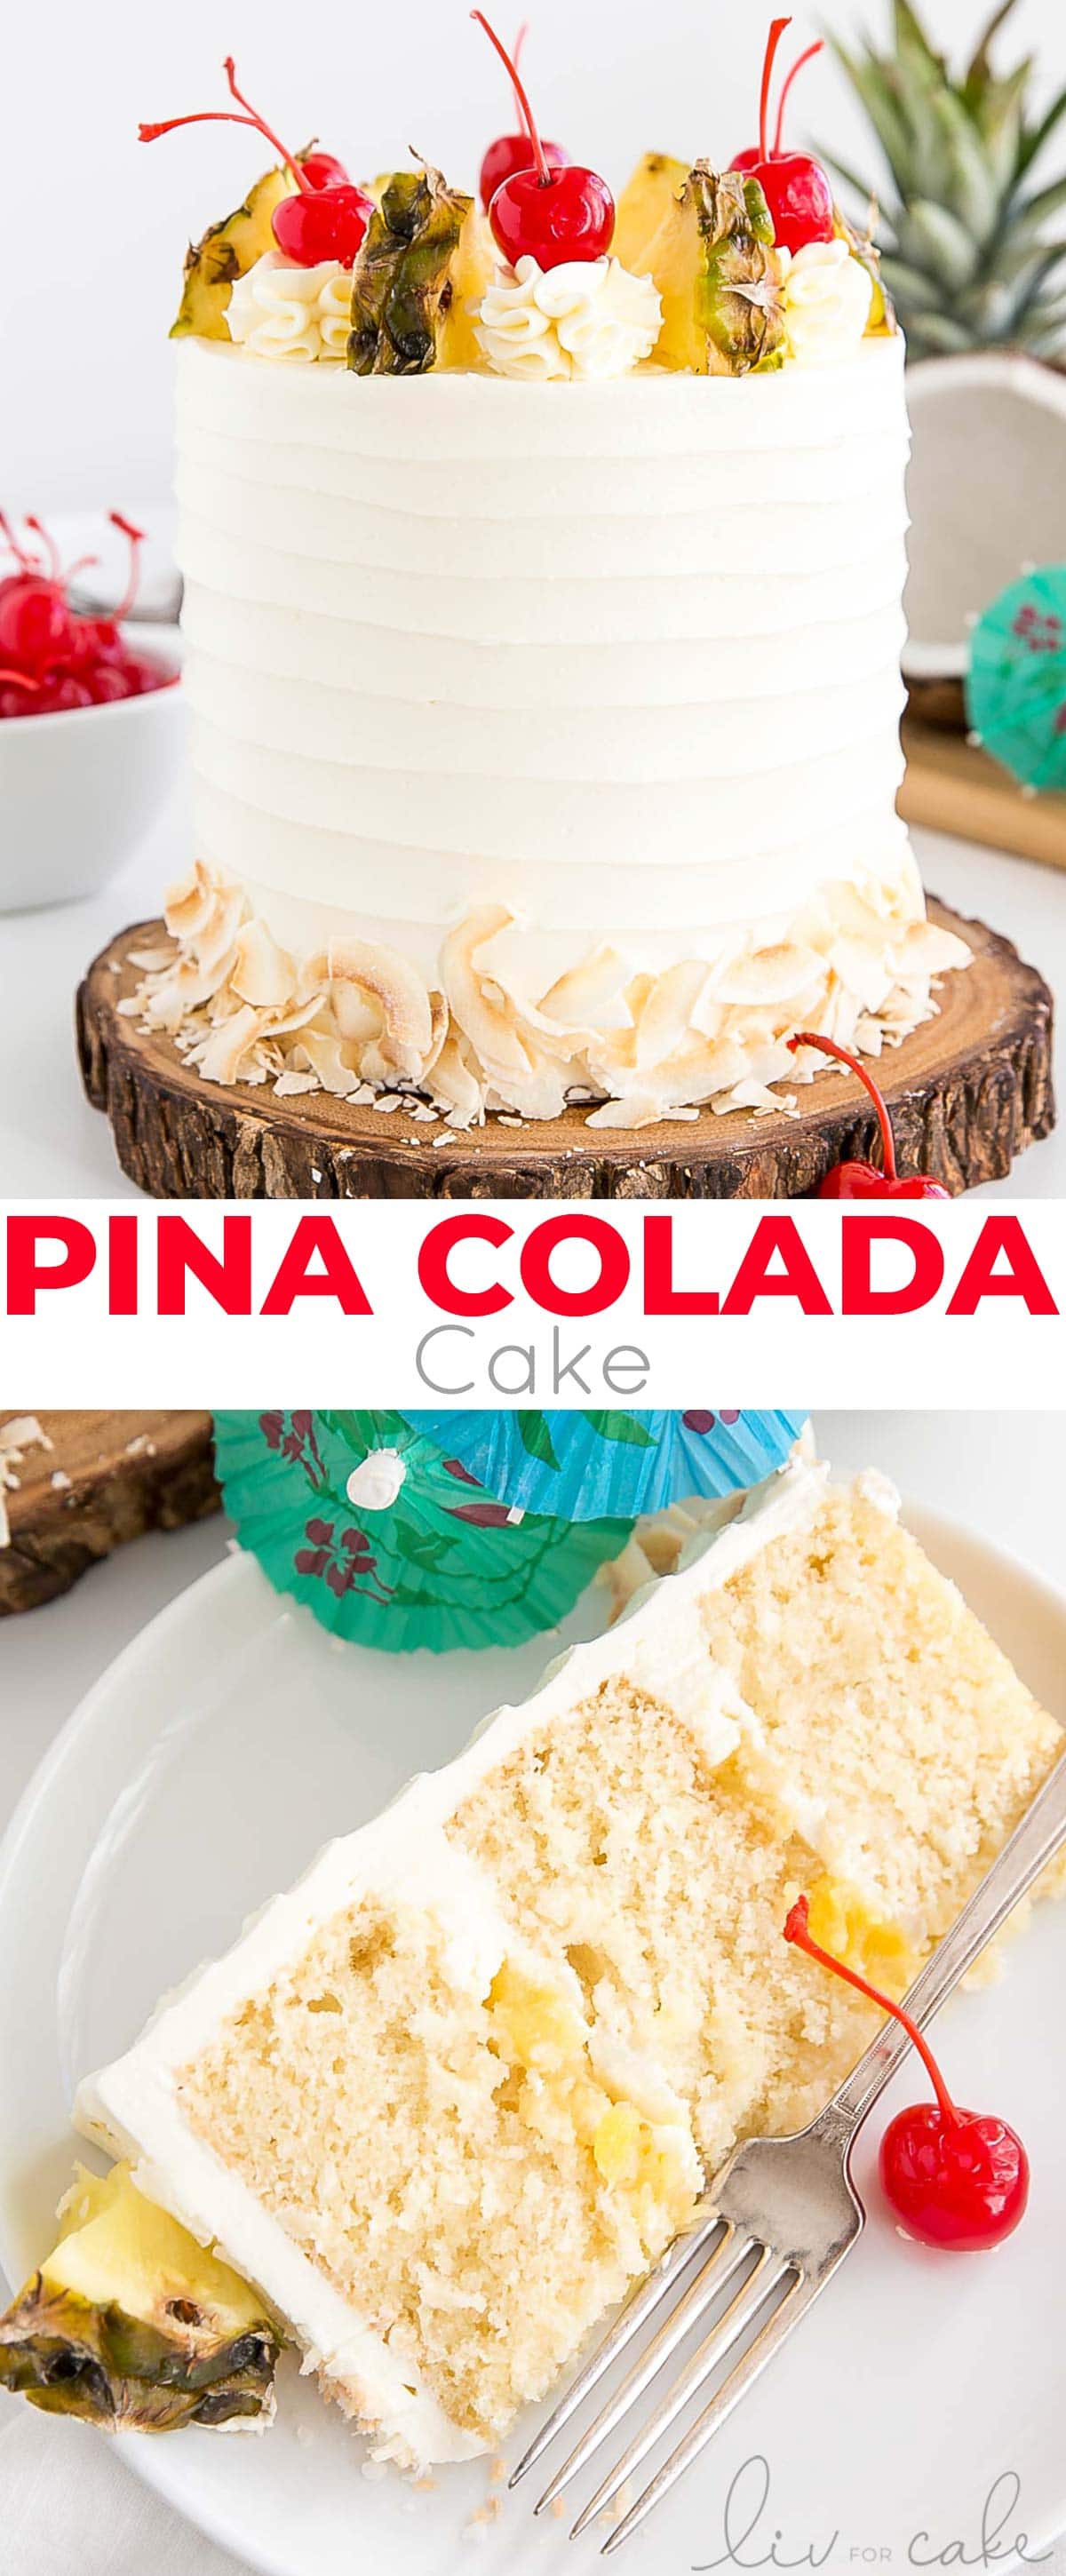 Pina Colada Cake photo collage.